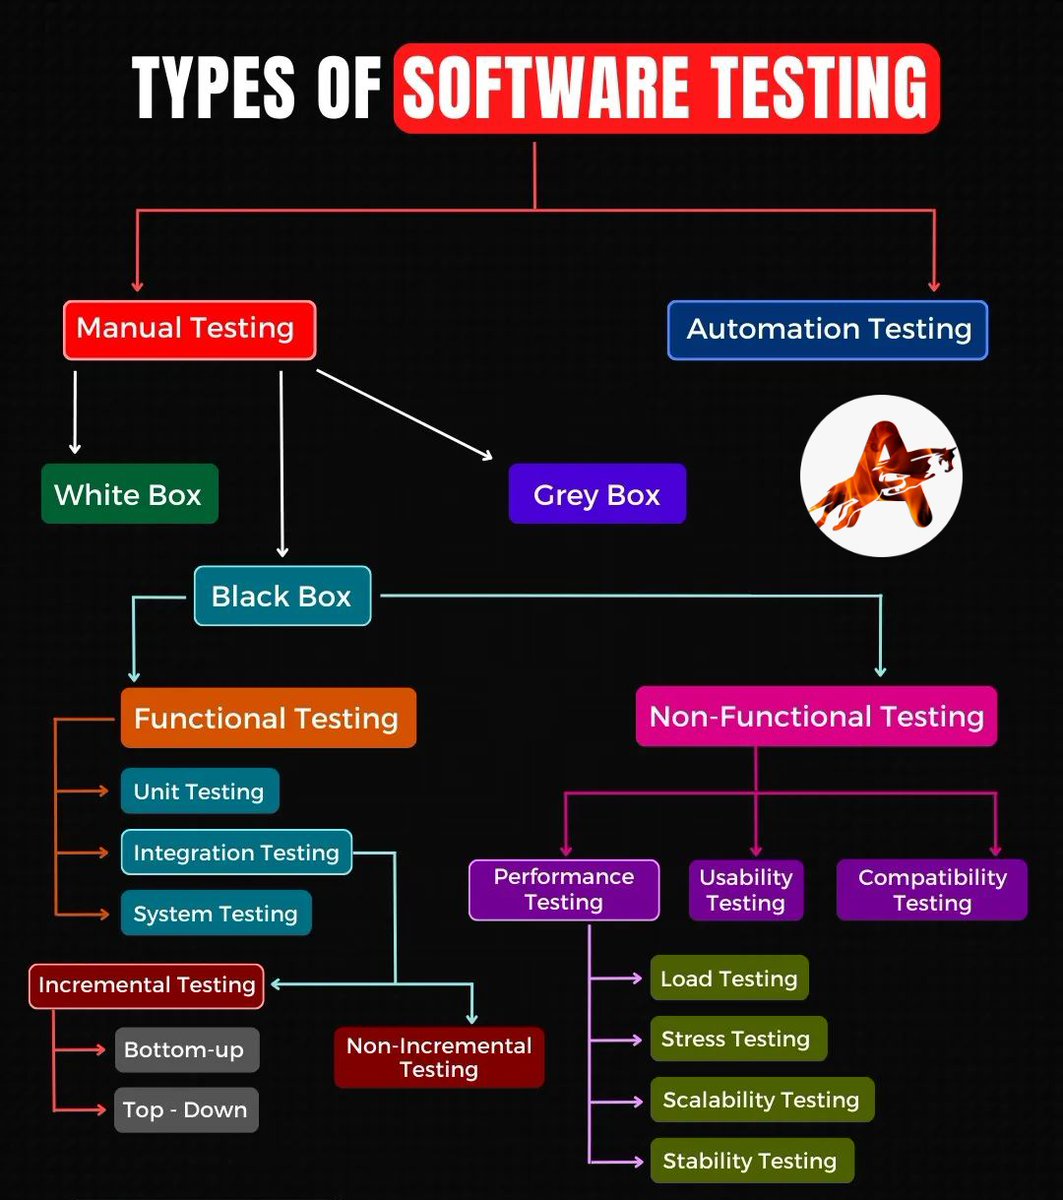 Types of software testing
............ 
#SoftwareTesting, #RegressionTesting, #FunctionalTesting, #SystemTesting, #IntegrationTesting, #UsabilityTesting, #PerformanceTesting, #AcceptanceTesting, #UserAcceptanceTesting, #AutomationTesting